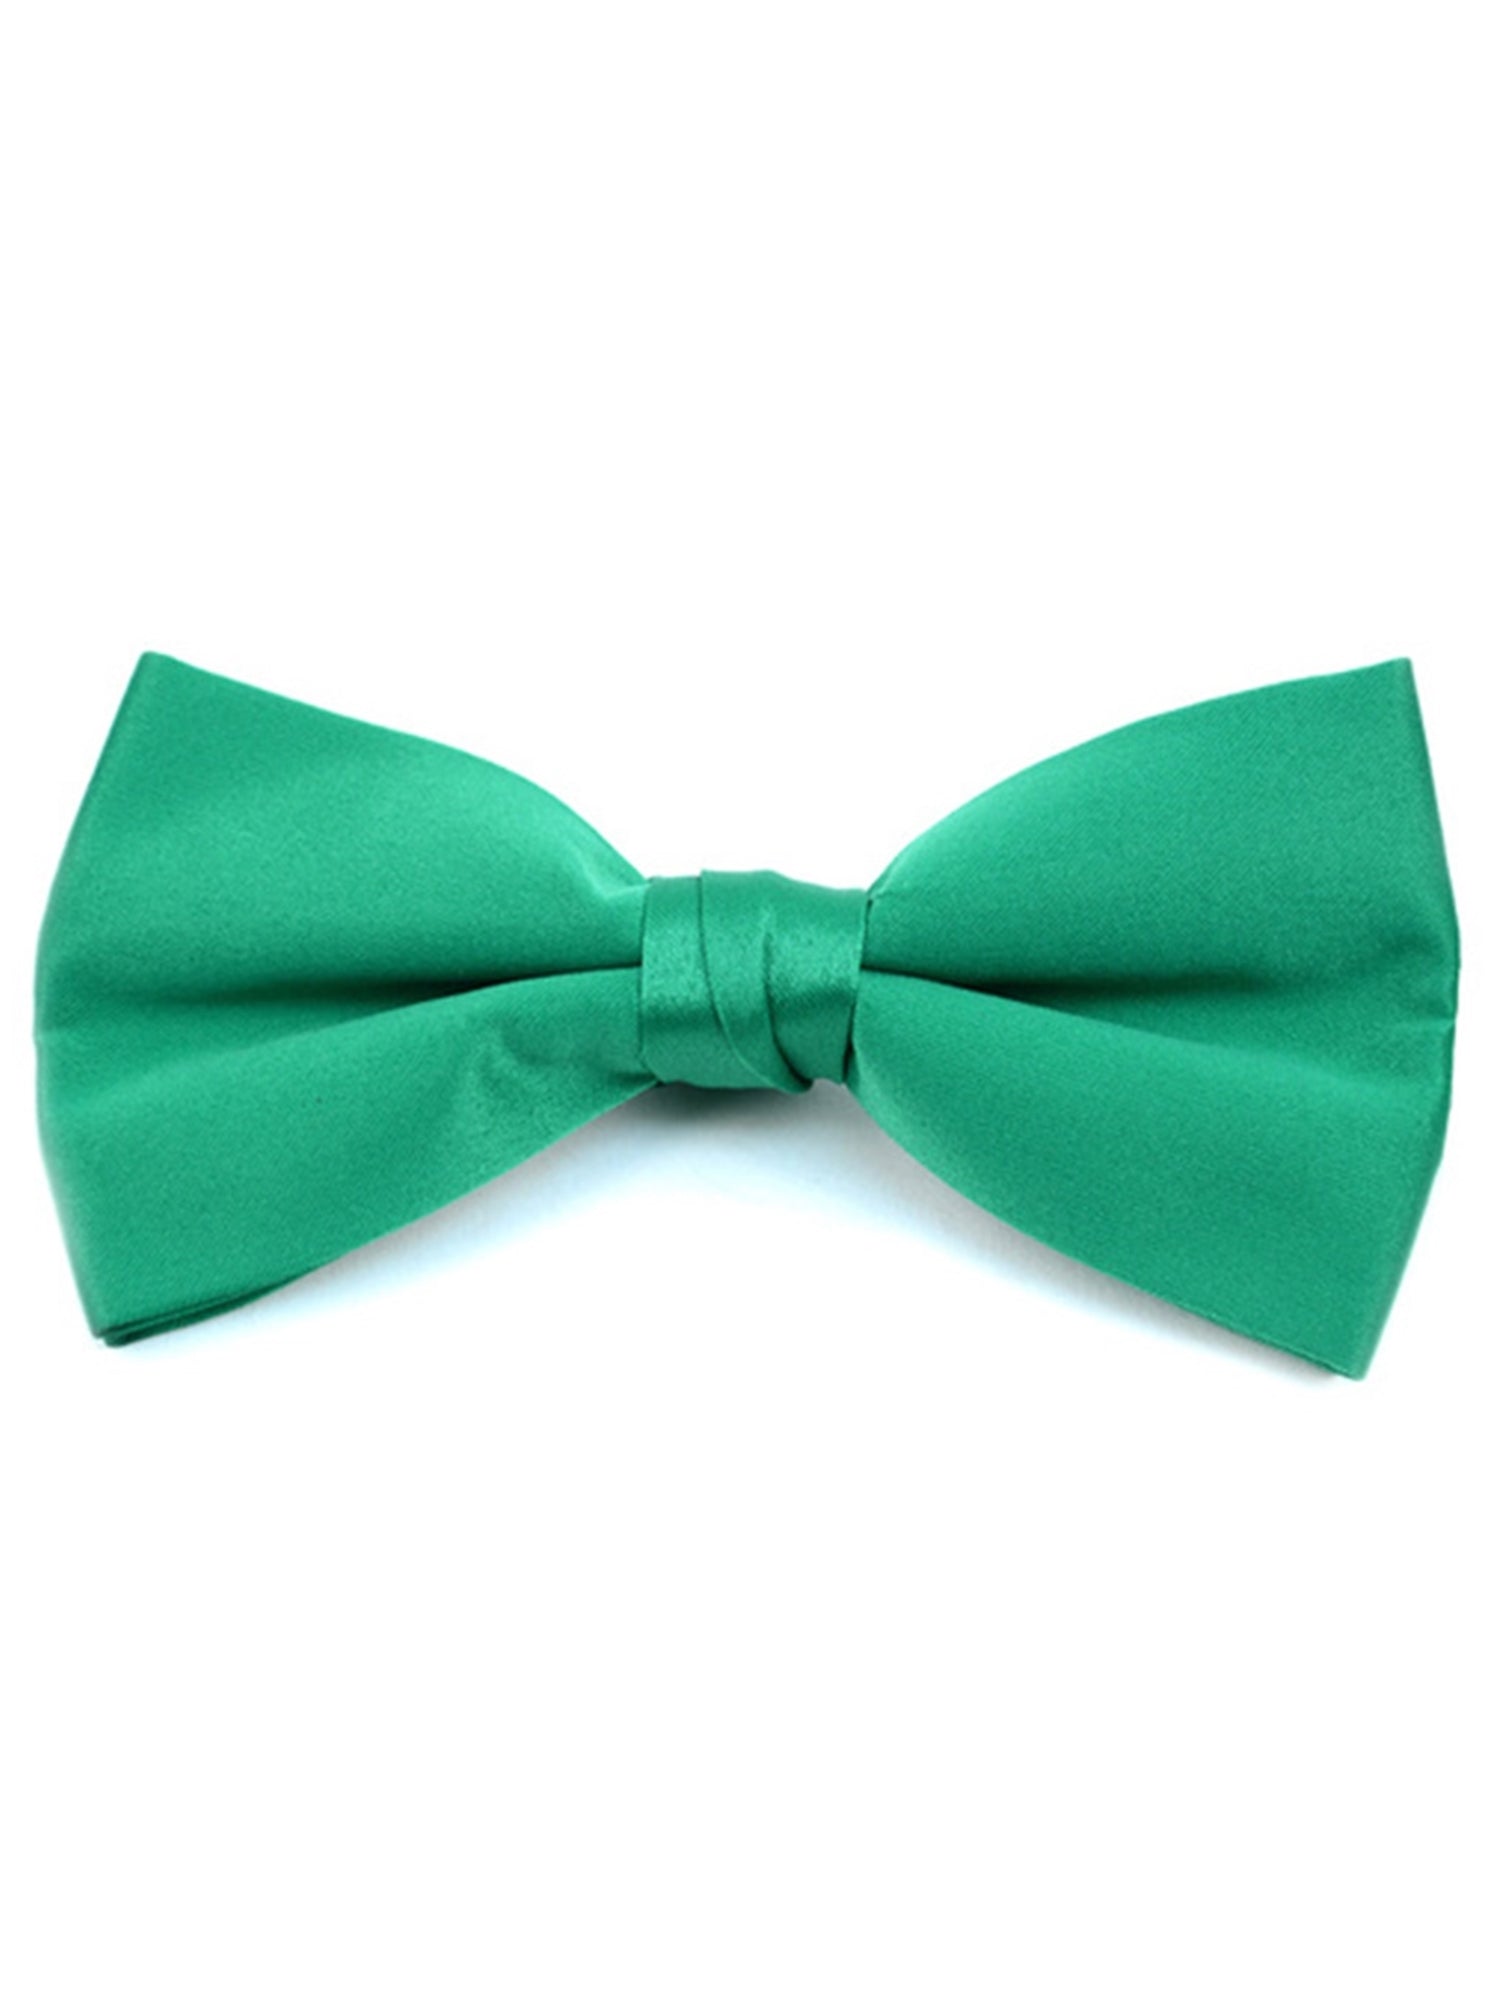 Men's Pre-tied Clip On Bow Tie - Formal Tuxedo Solid Color Men's Solid Color Bow Tie TheDapperTie Green One Size 